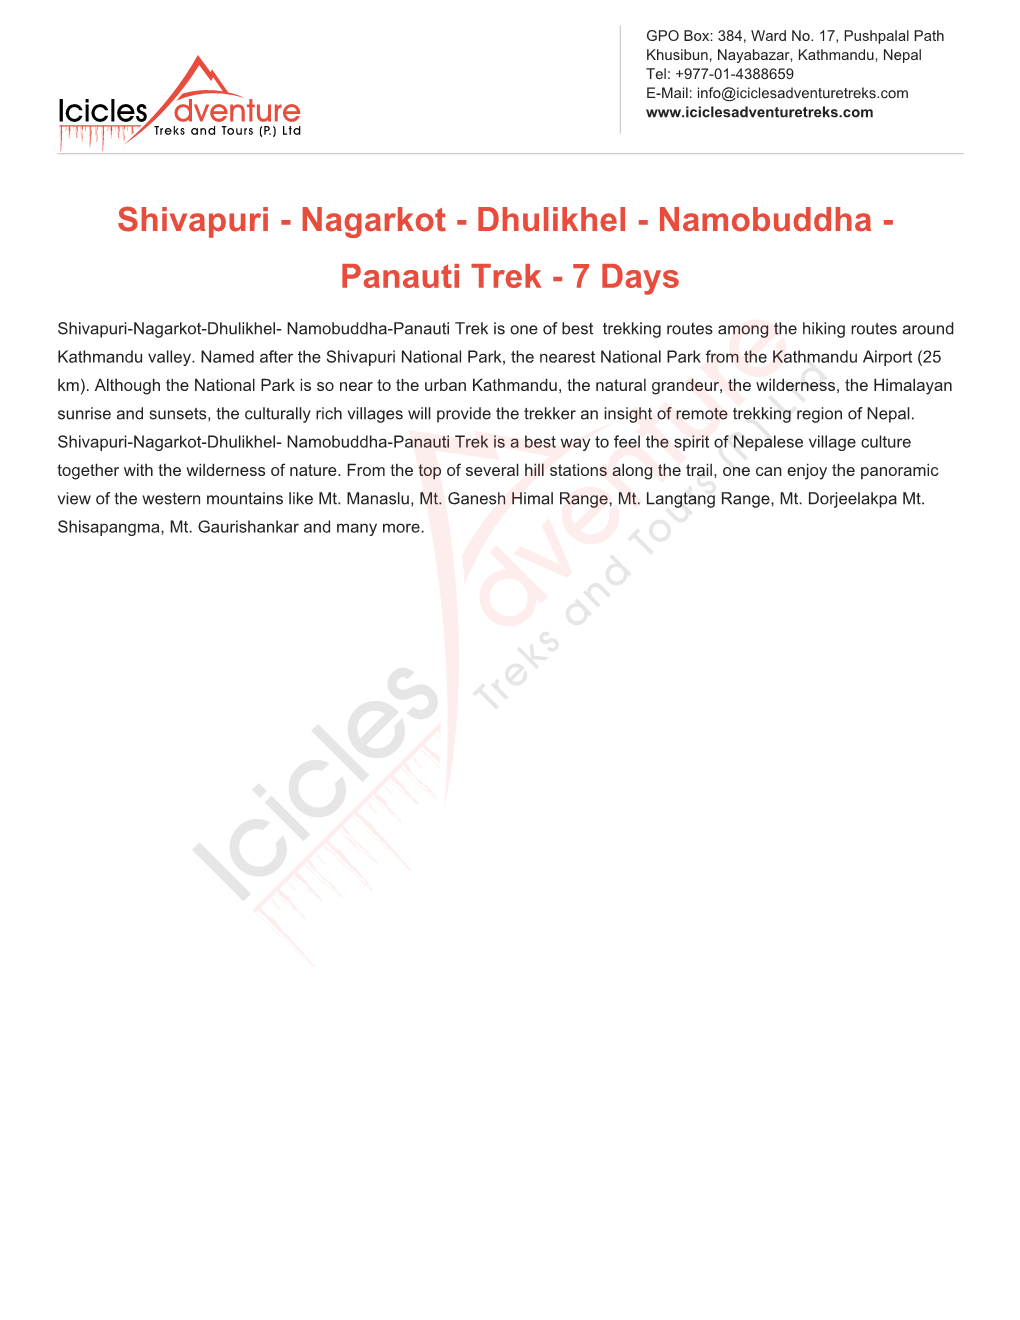 Shivapuri - Nagarkot - Dhulikhel - Namobuddha - Panauti Trek - 7 Days